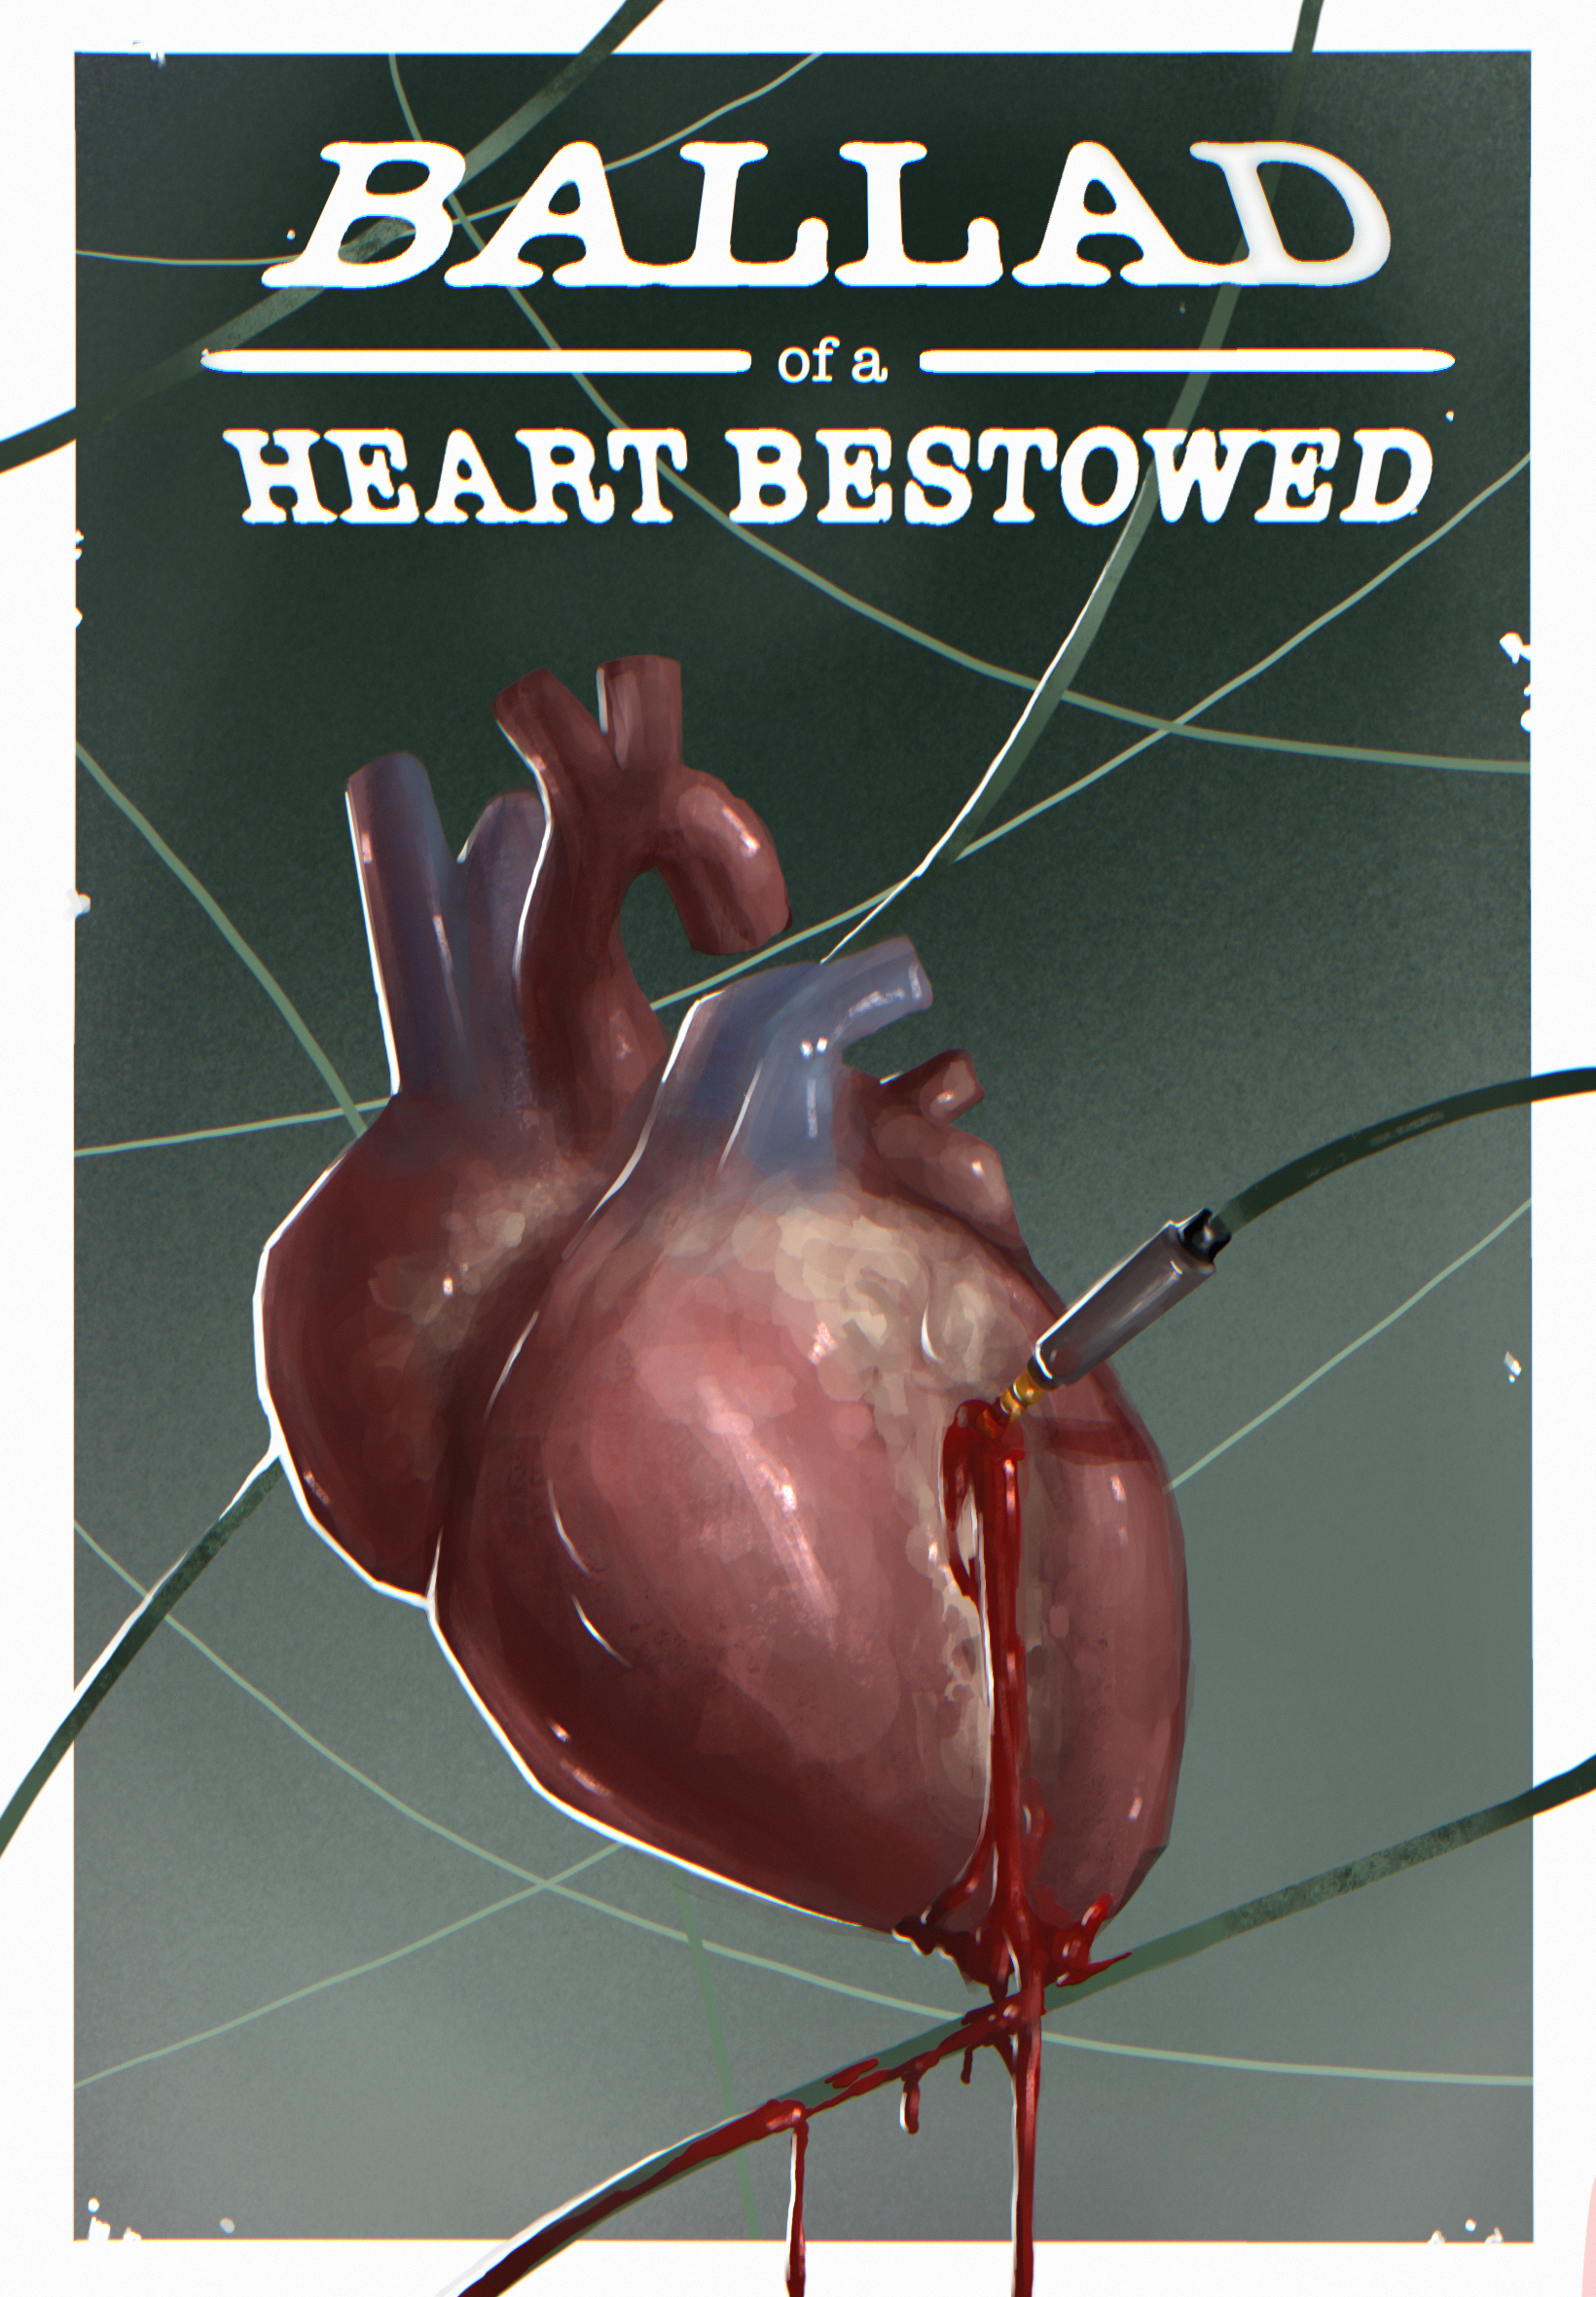 heart bestowed poster.png